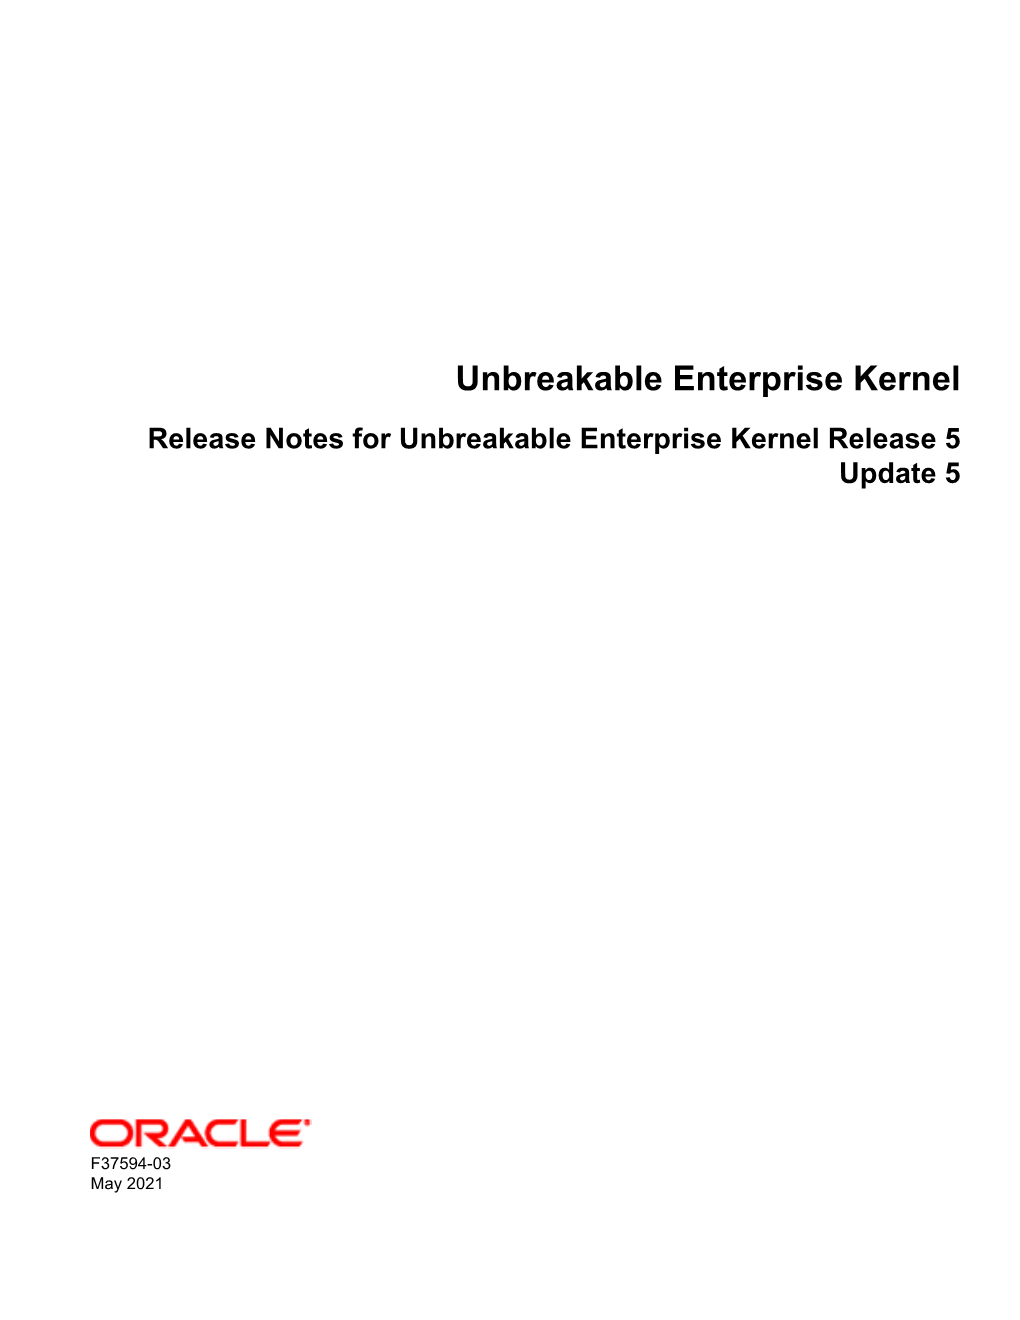 Unbreakable Enterprise Kernel Release Notes for Unbreakable Enterprise Kernel Release 5 Update 5